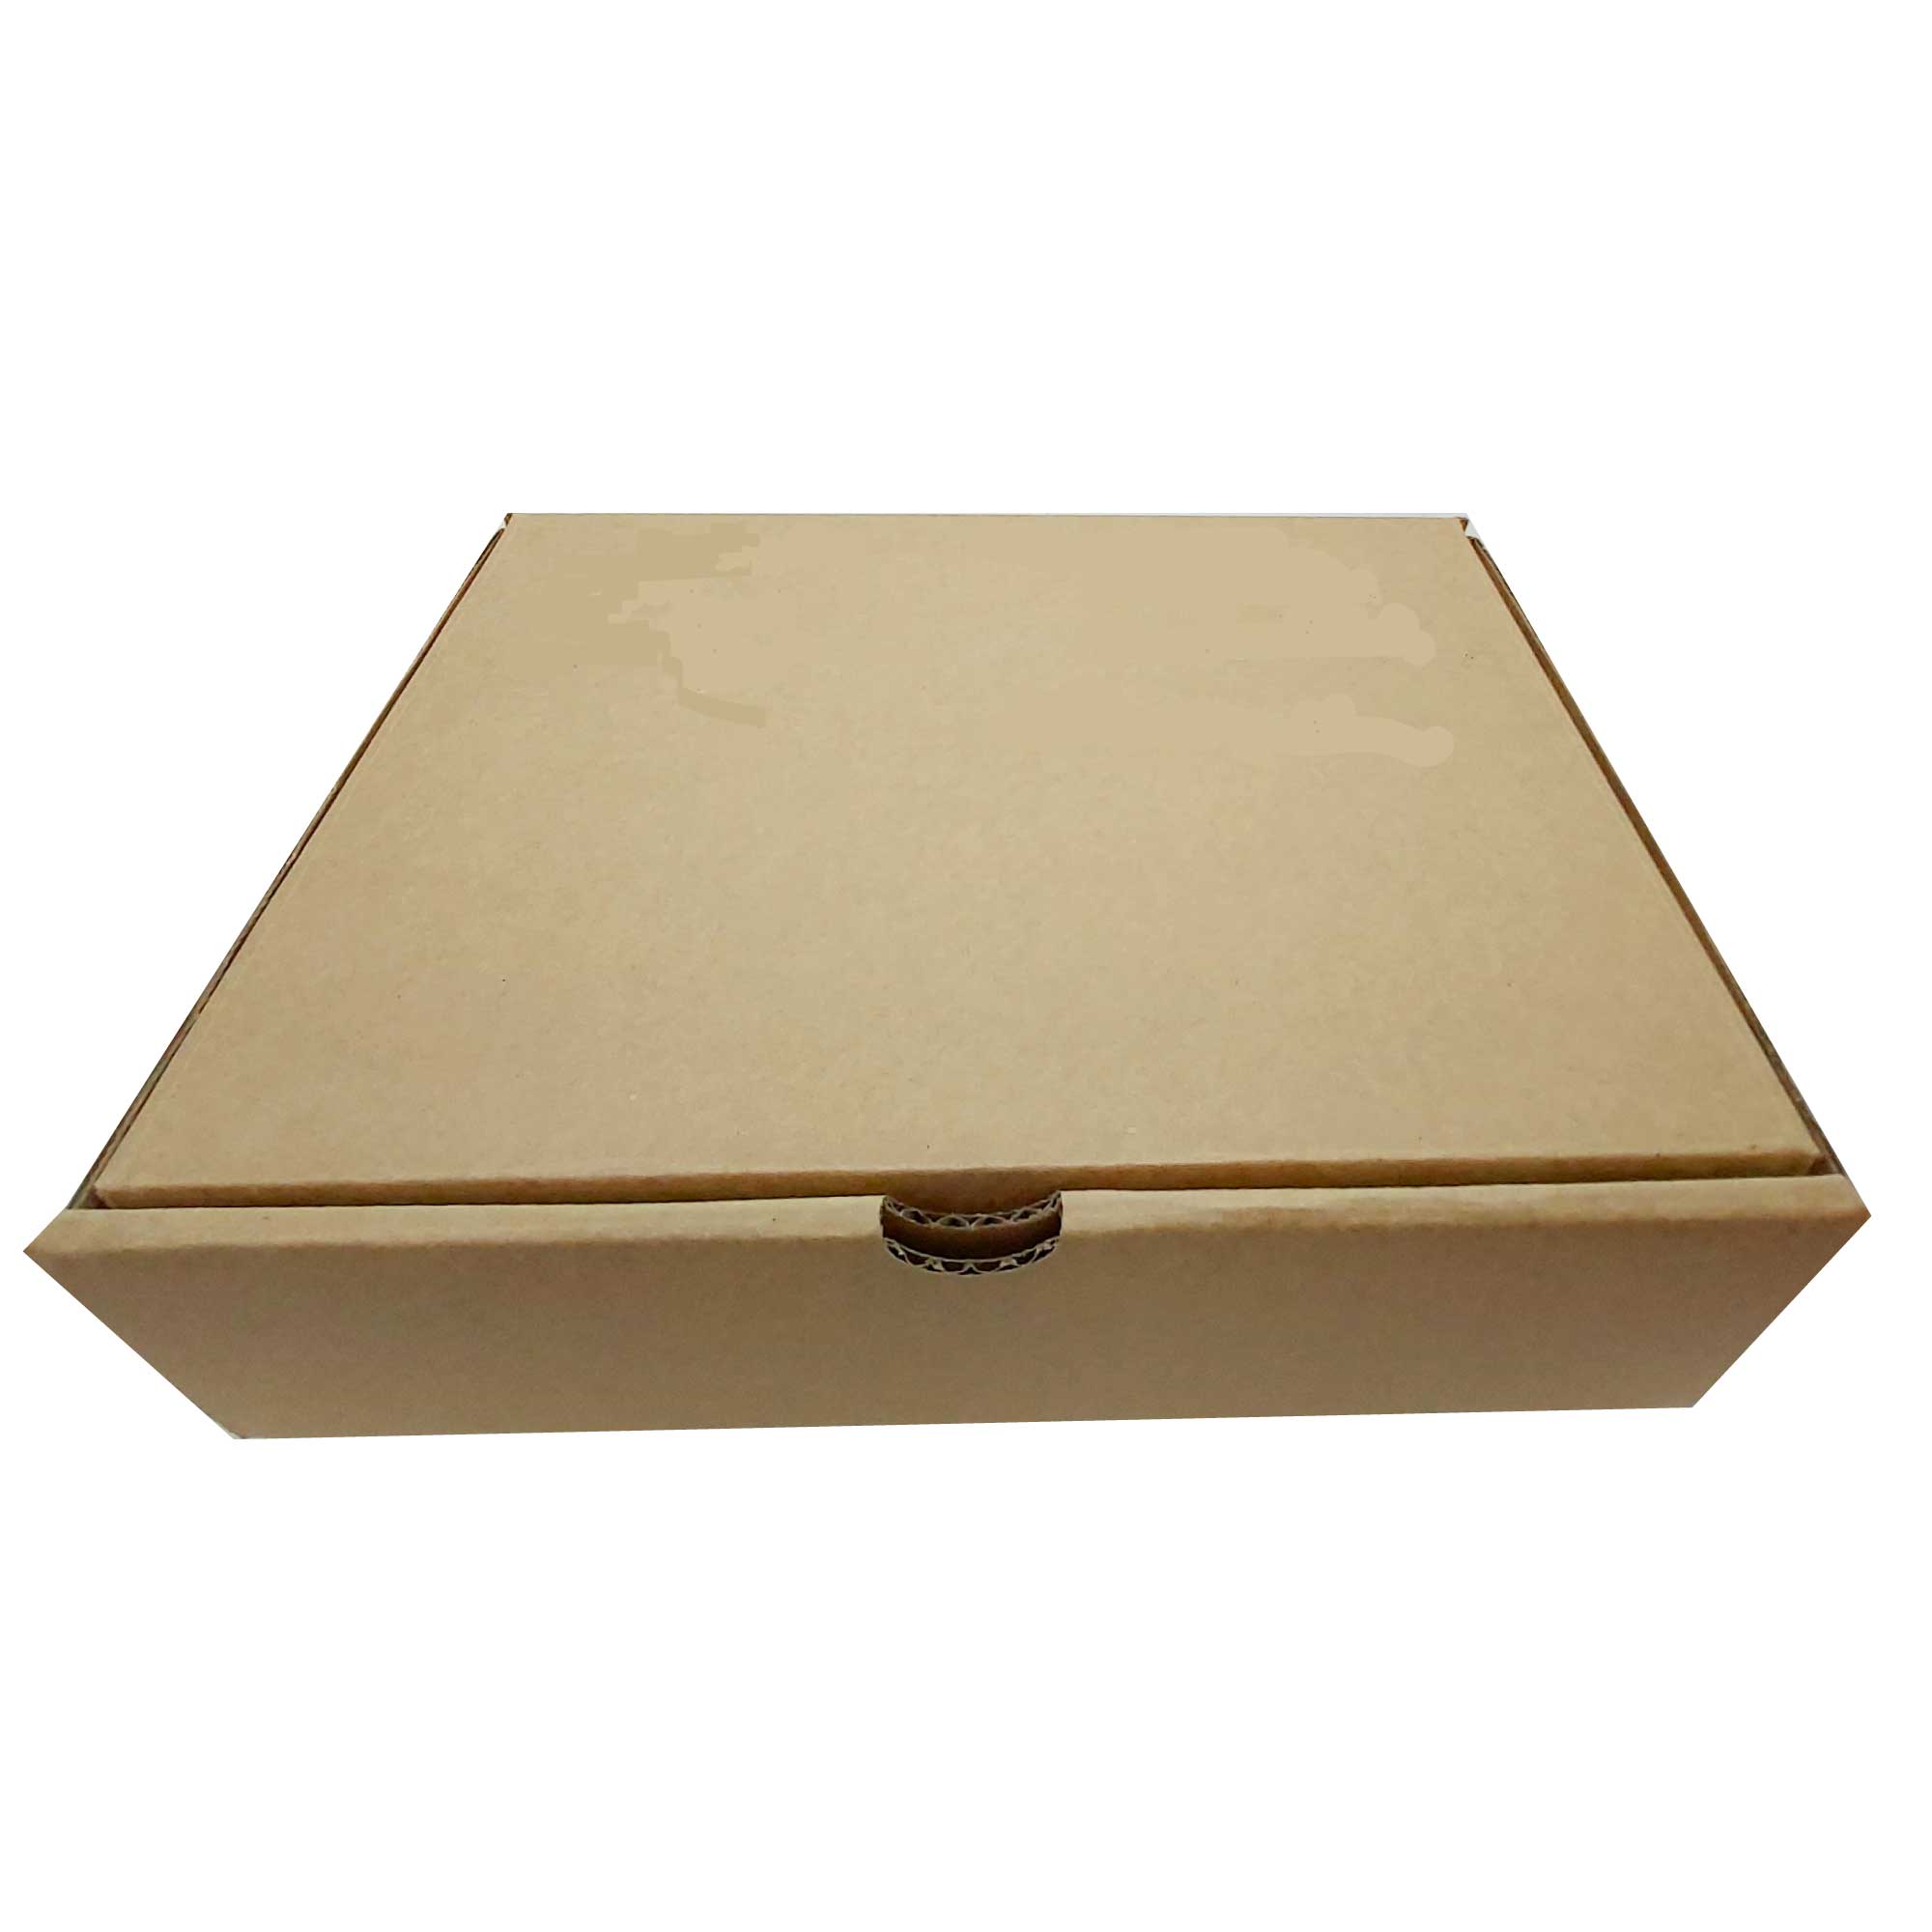 62x Mailing Box 320x210x85 Postal Brown Cardboard Large Diecut Shipping Carton